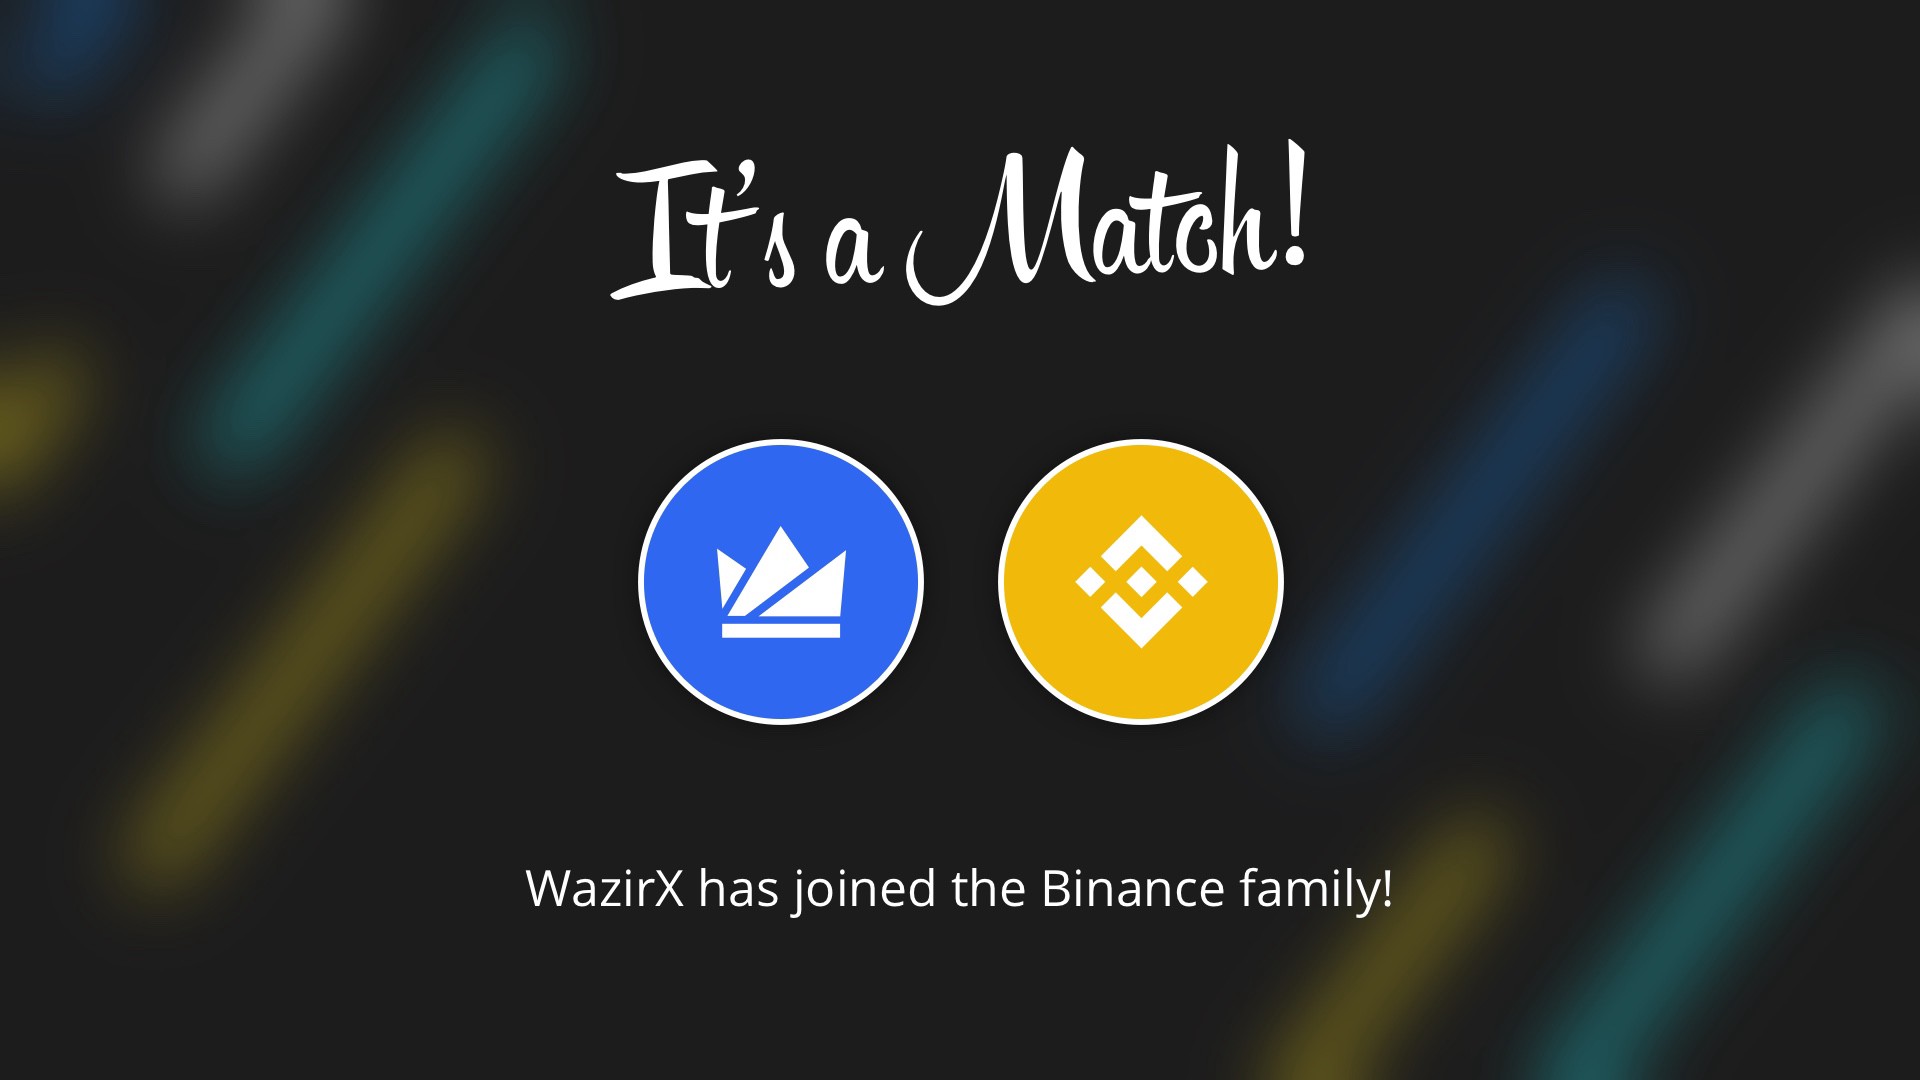 WazirX has joined the Binance family